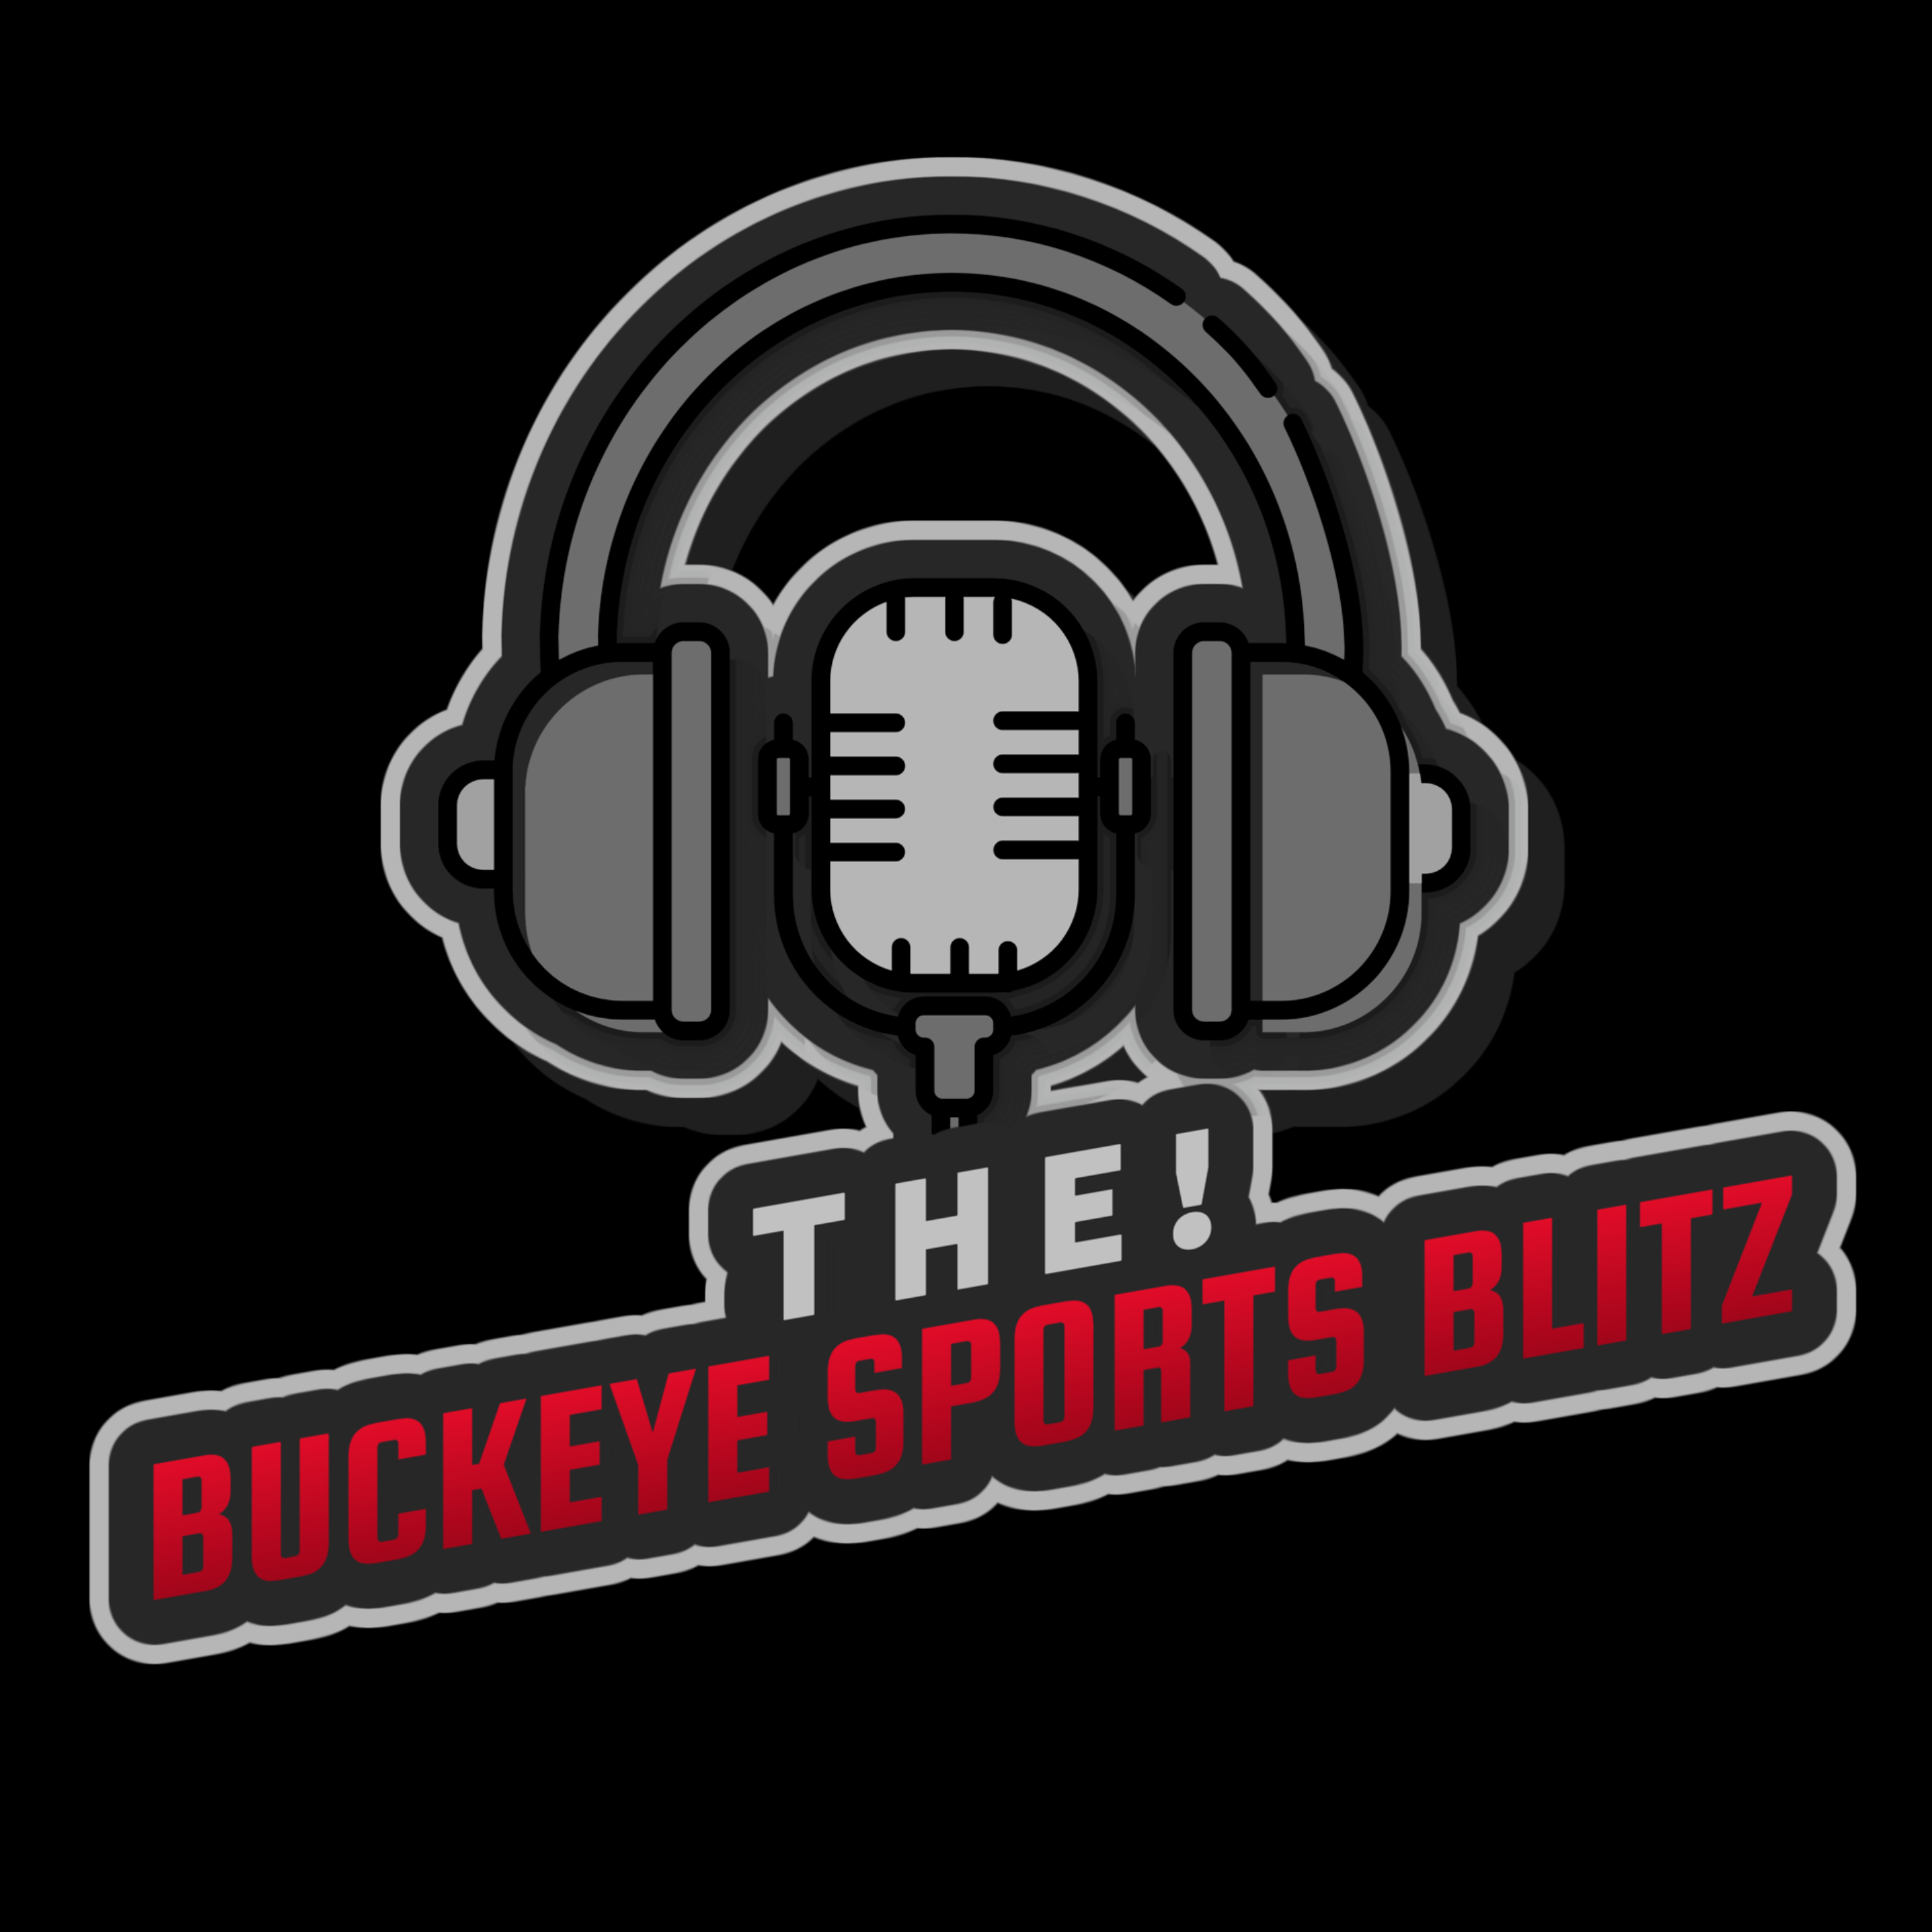 The Buckeye Sports Blitz